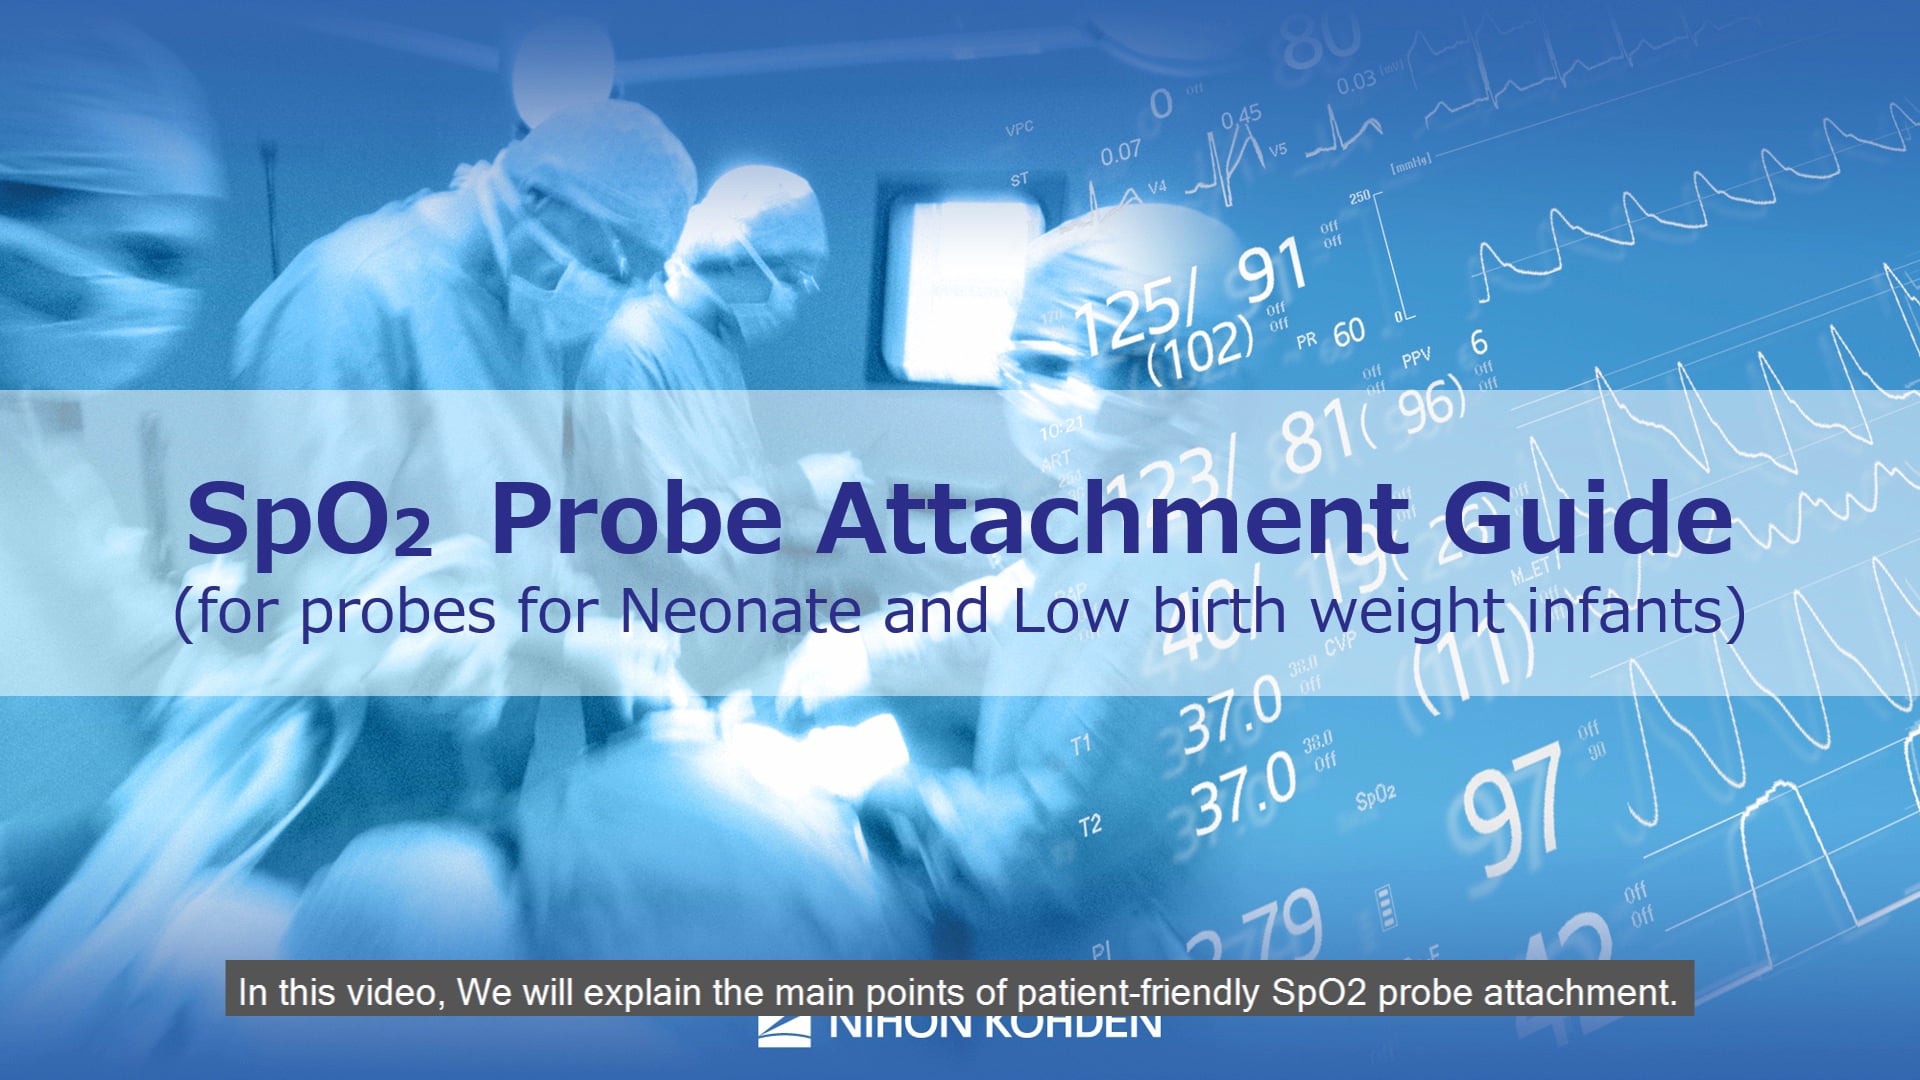 SpO2 Probe Attachment Guide for Neonate and Low Birth Weight